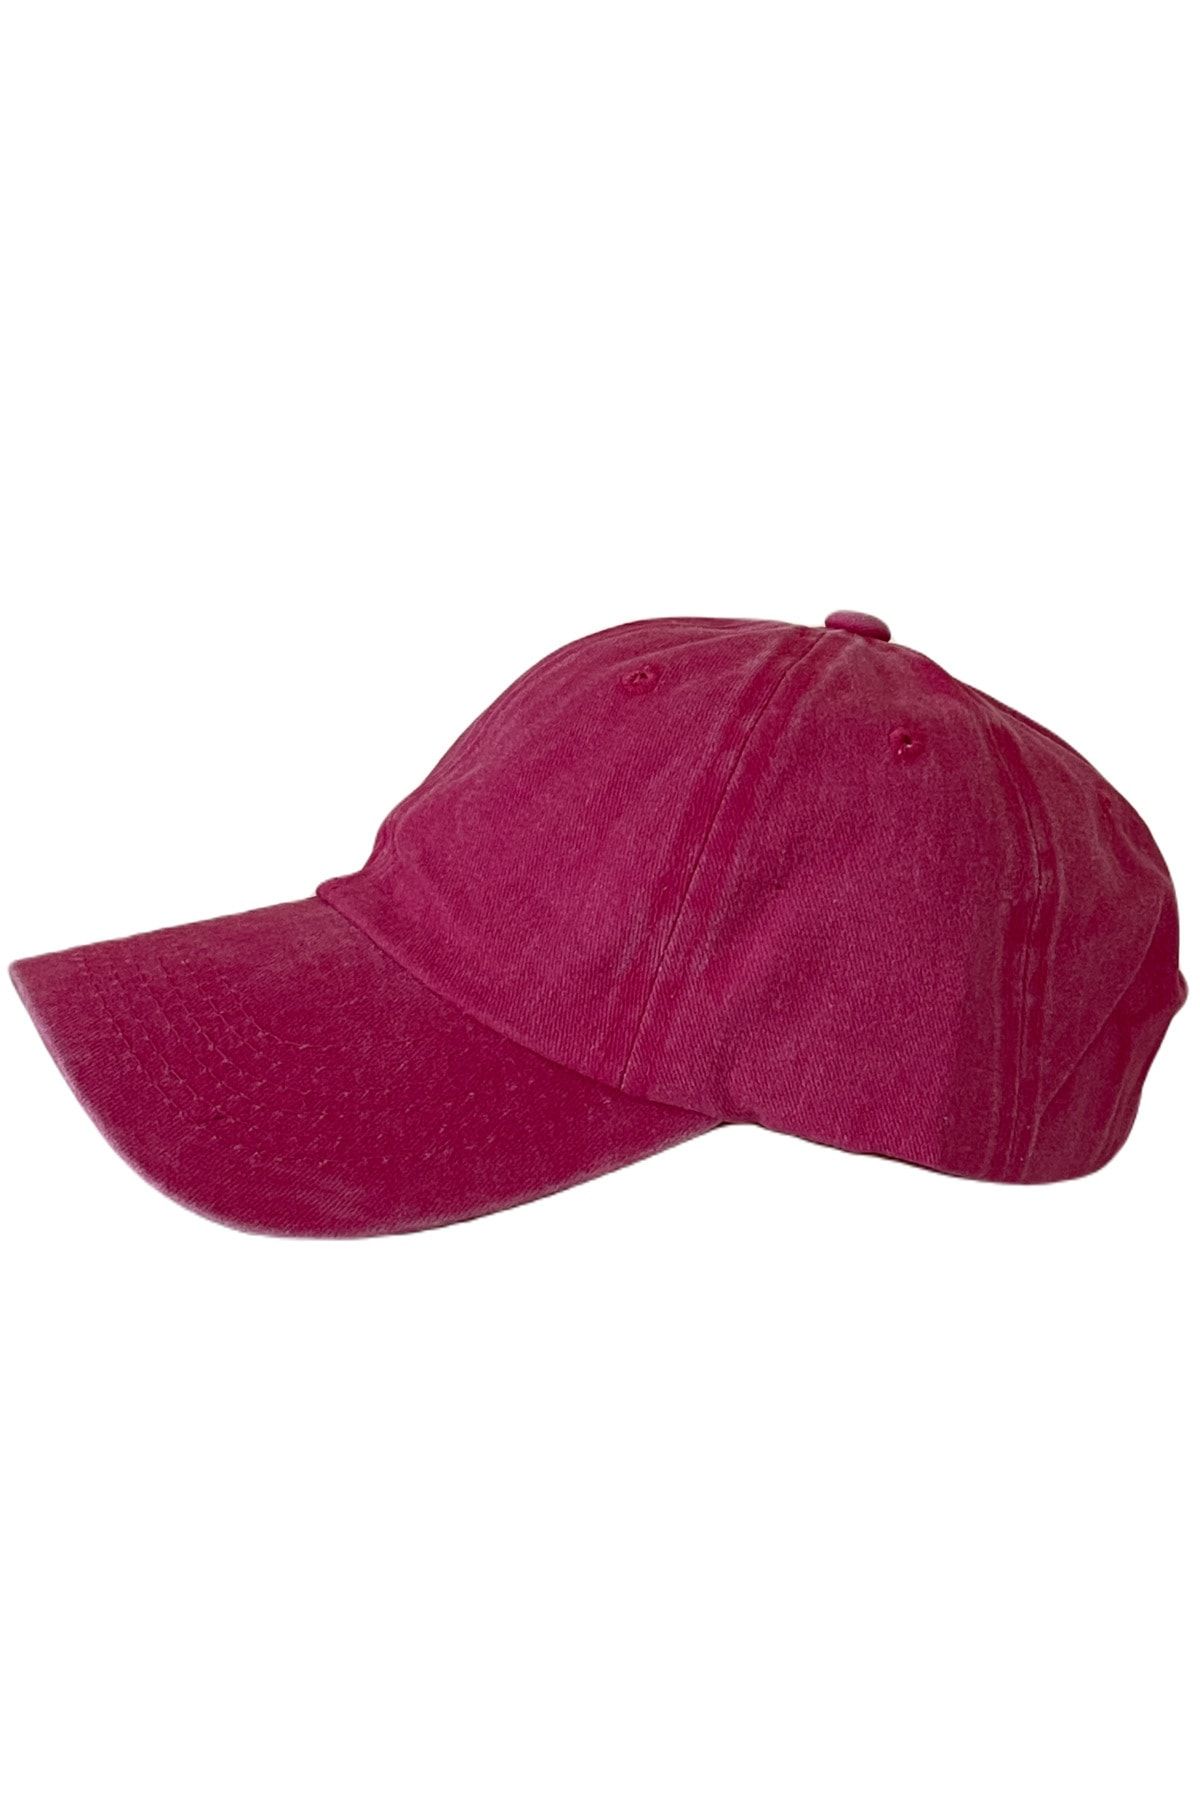 Rupen Kraft Yeni Sezon Bandana KombinliDüz Pembe Renk Yıkamalı Eskitme Şapka Vintage Şapka